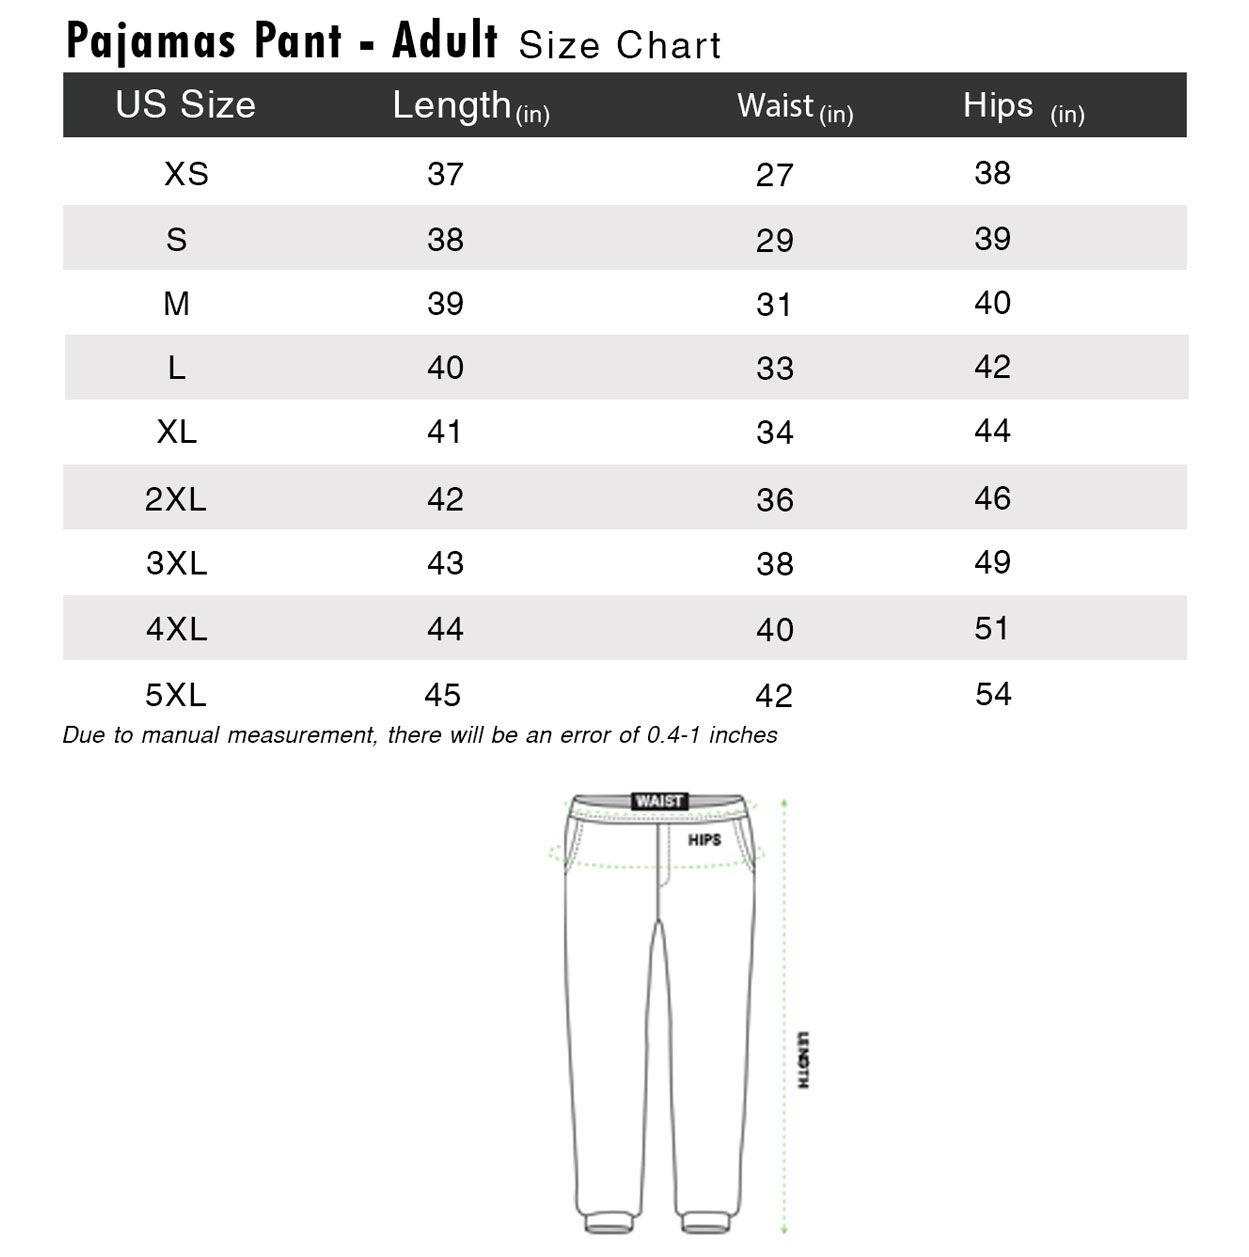 Pajamas pant size chart